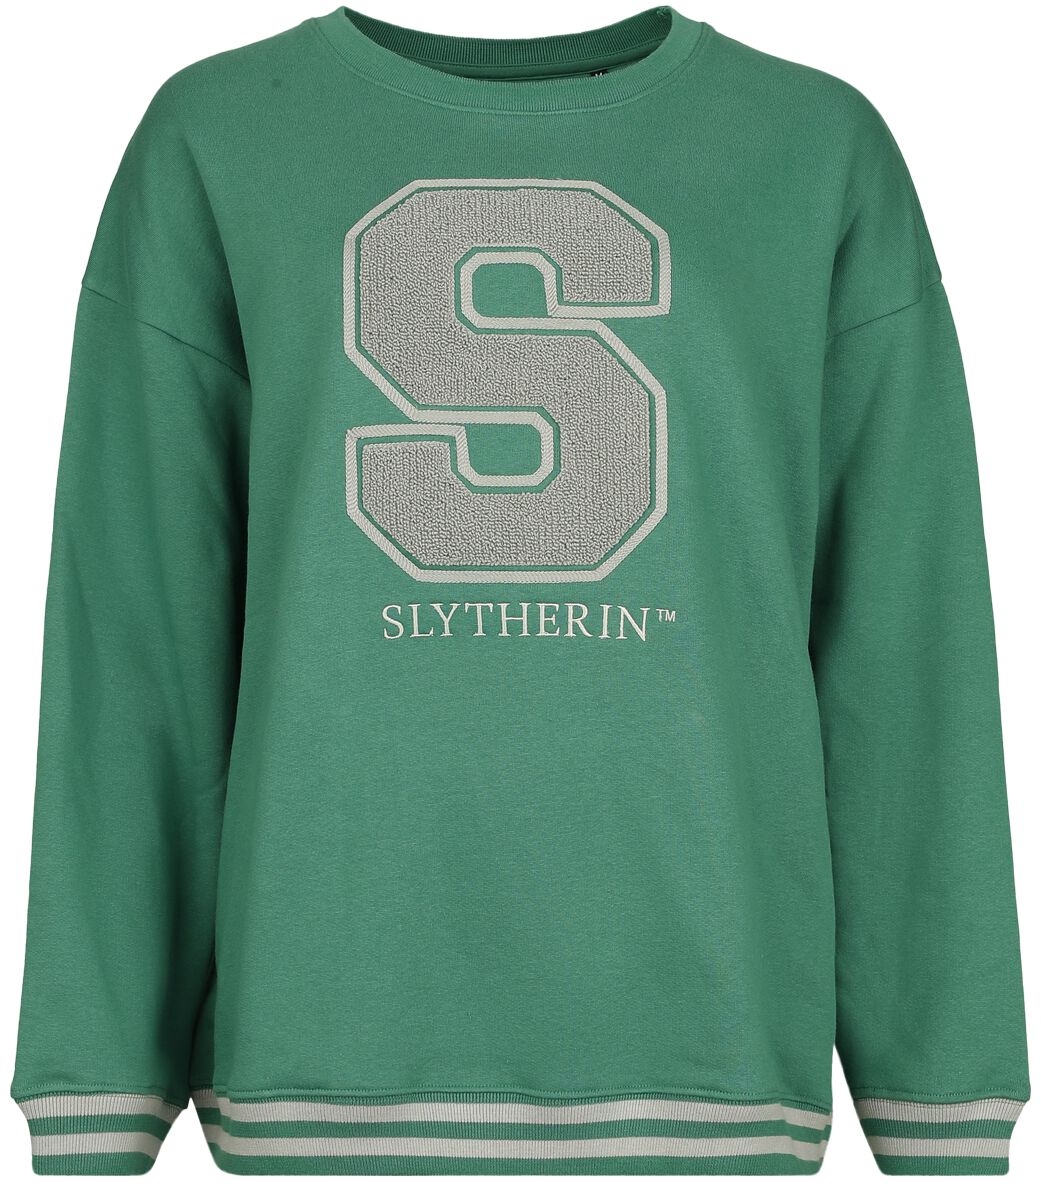 Harry Potter Slytherin Clothing Pack - 6 piece - Boutique Harry Potter